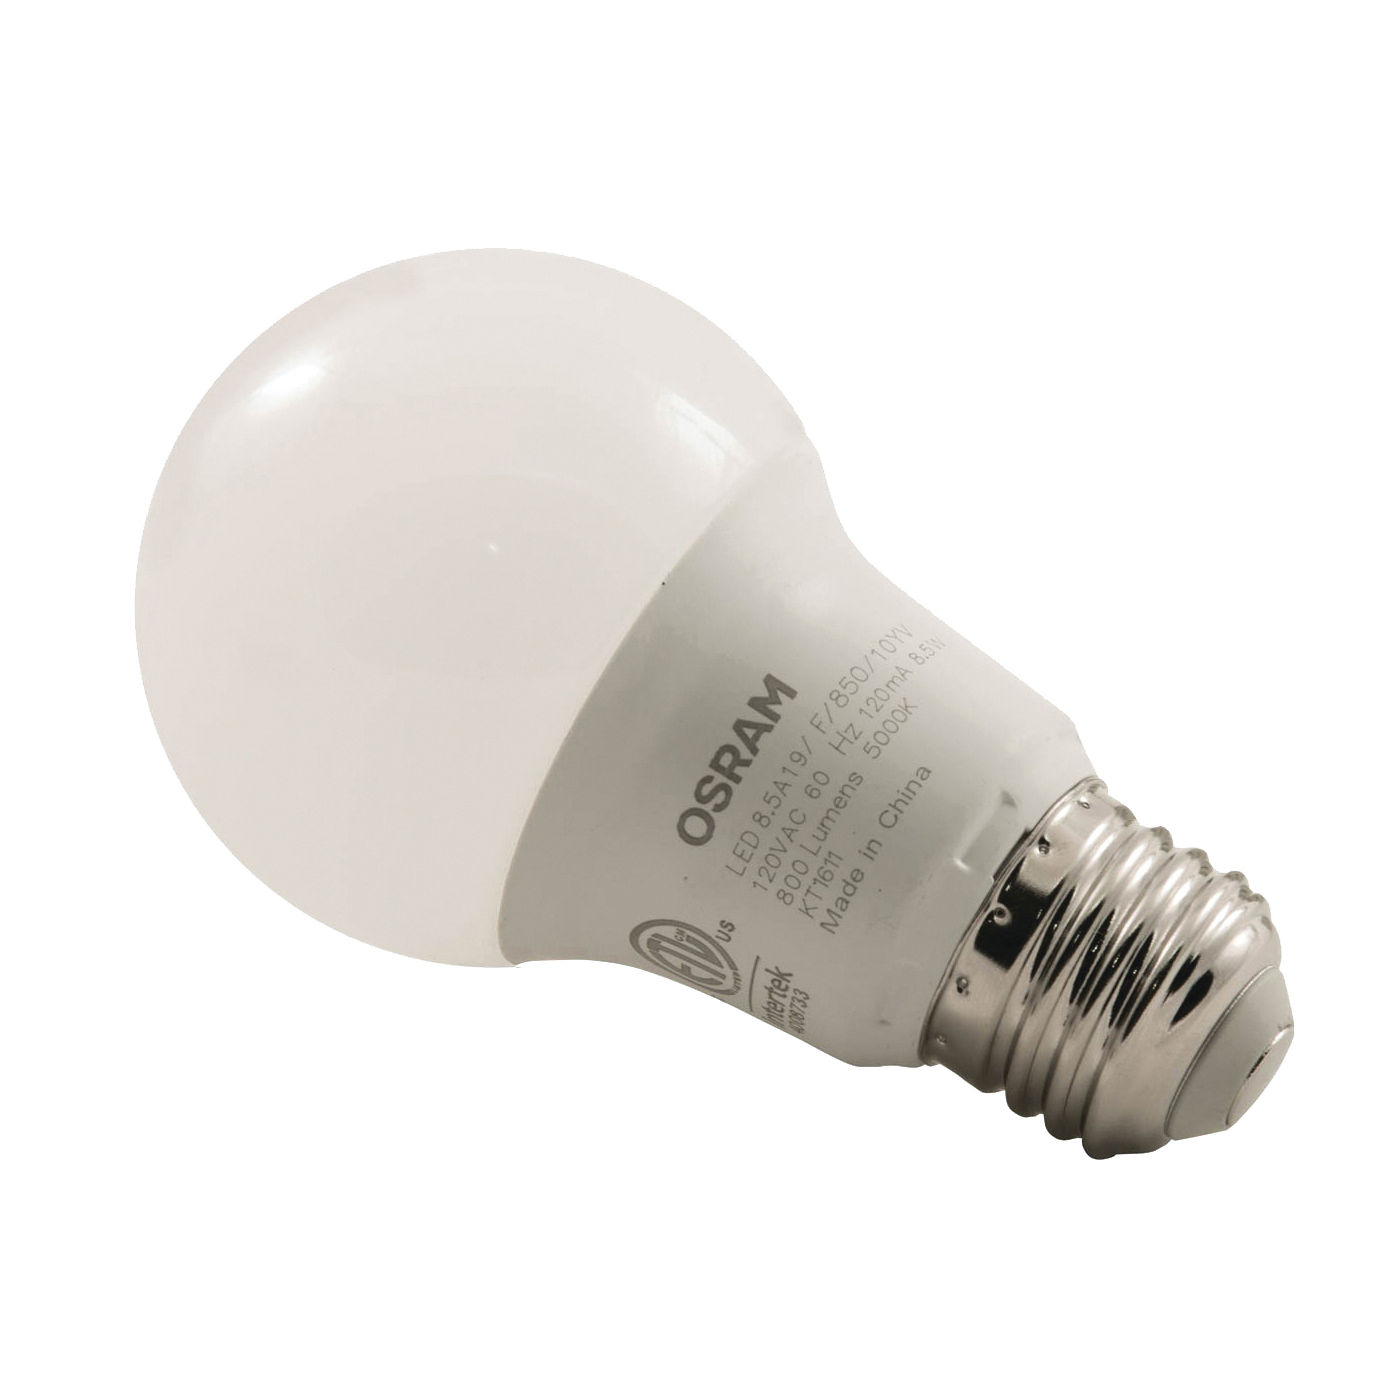 Buy Sylvania 79284 LED Bulb, General Purpose, A19 Lamp, 60 W Equivalent, E26 Lamp Base, Bright White Light